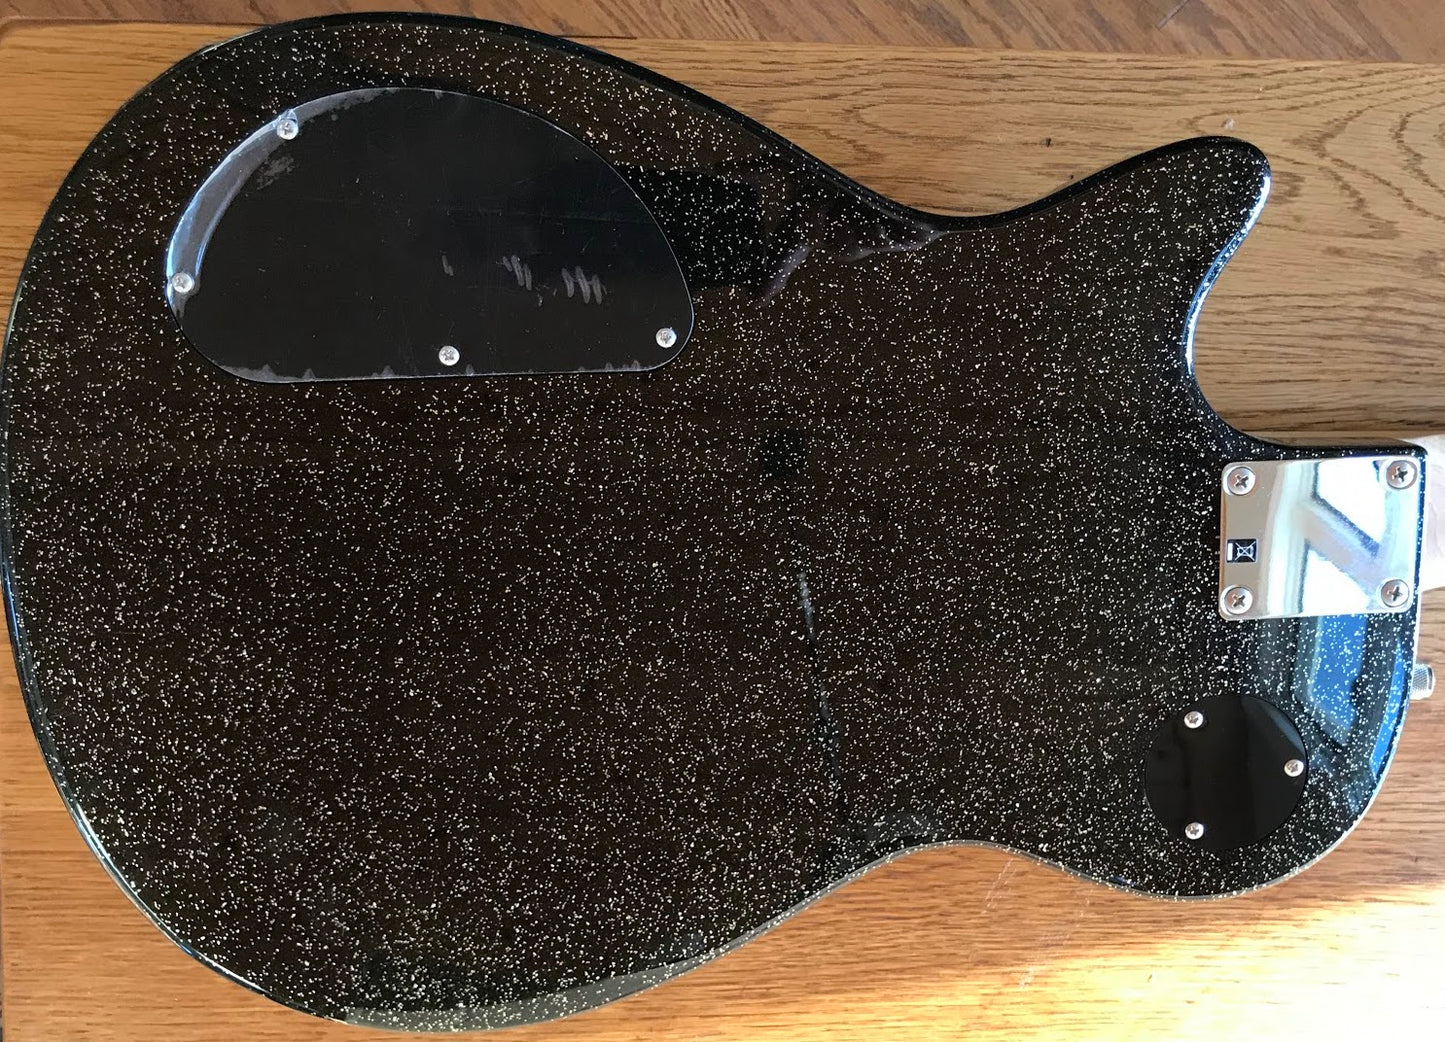 Electric Guitar (Gretsch EM) Jet Baritone Black Sparkle